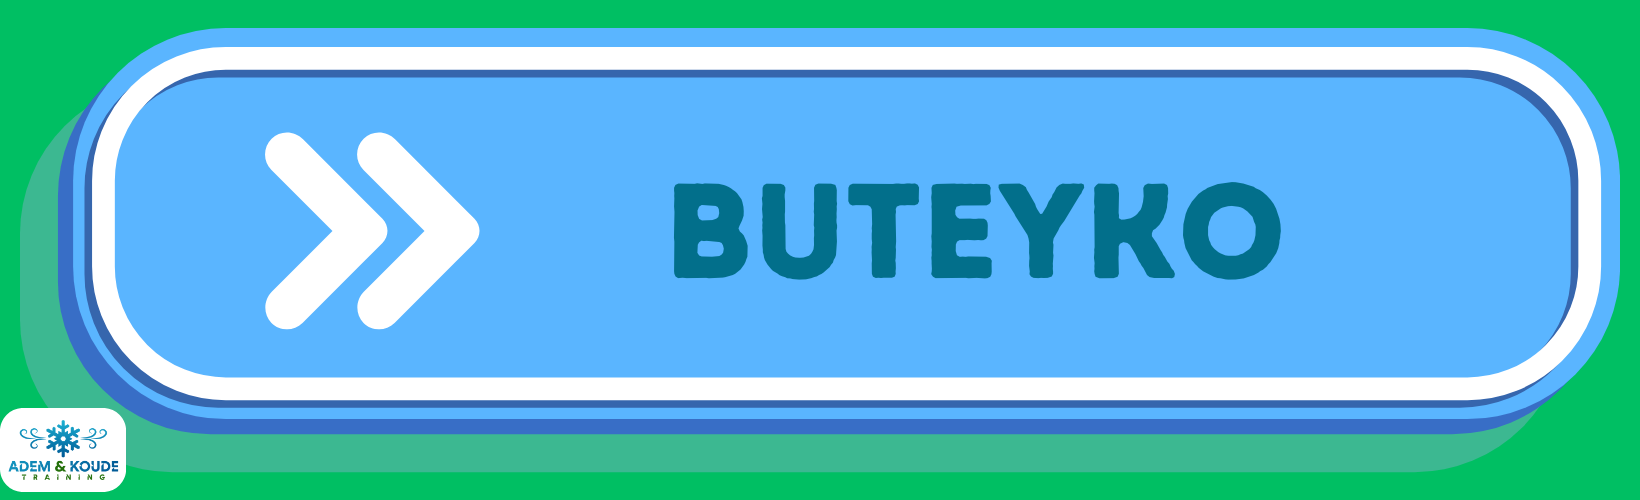 plaatje  met witte letters Buteyko. kleur blauw en groen